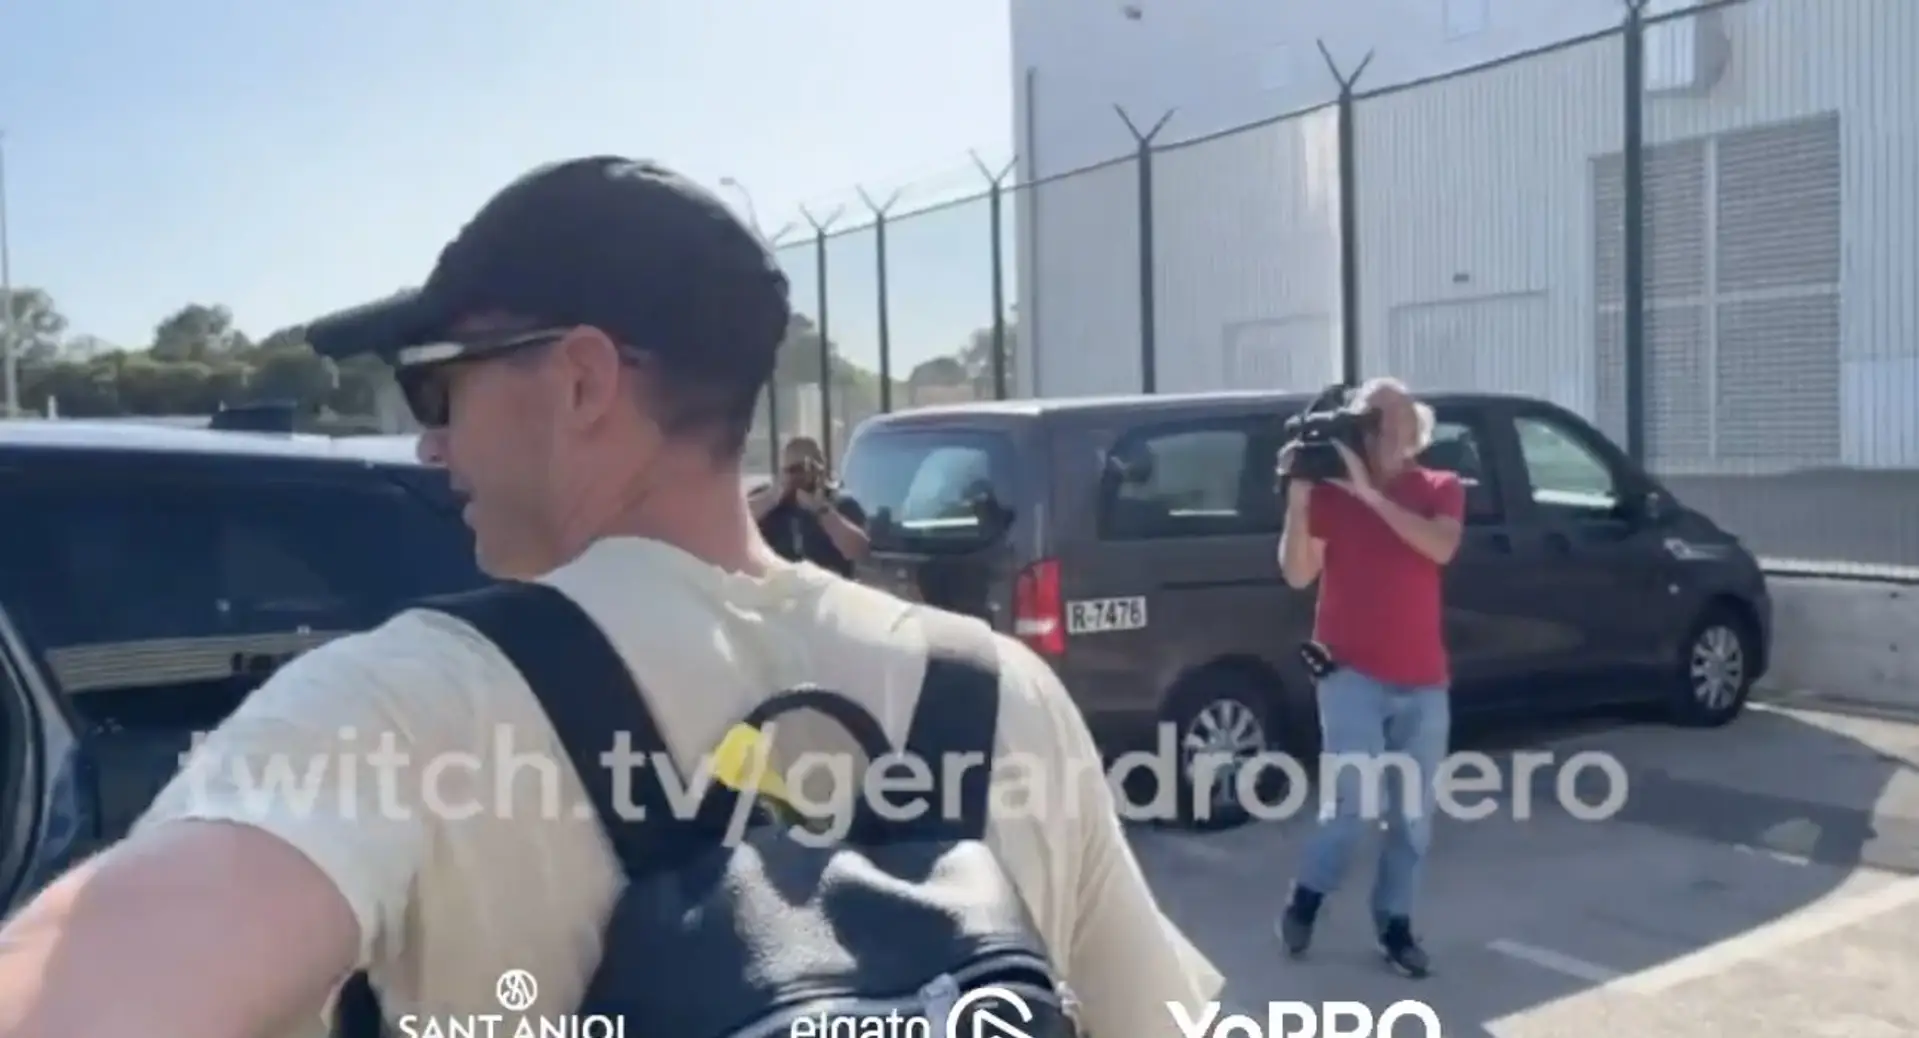 Lewandowski arrives in Spain 